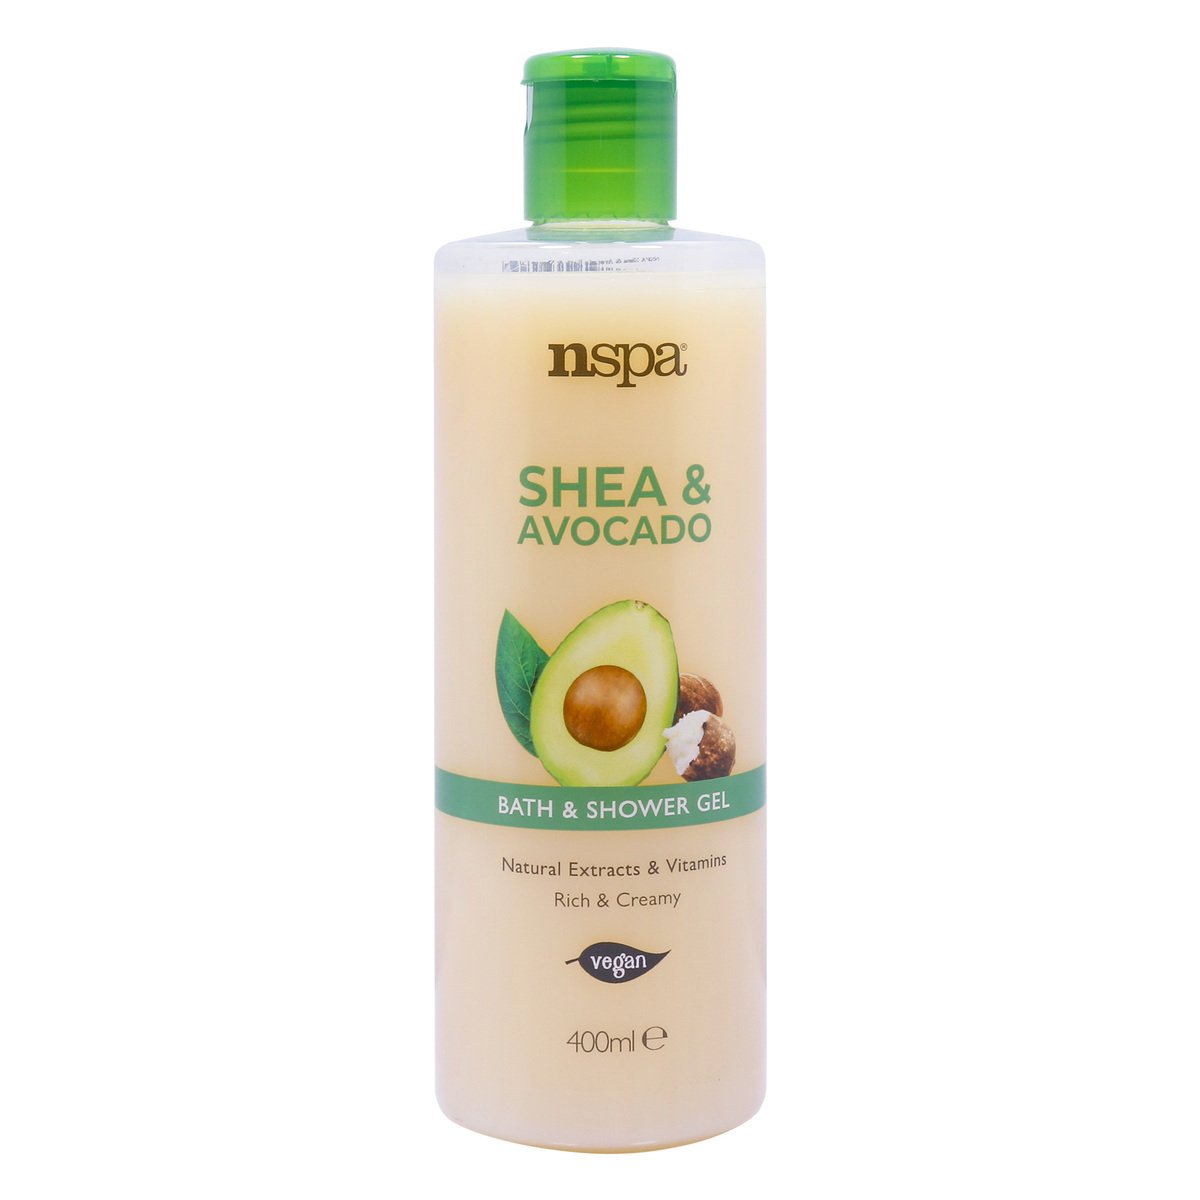 Nspa Shea & Avocado Bath & Shower Gel Natural Extracts & Vitamin Rich & Creamy 400 ml